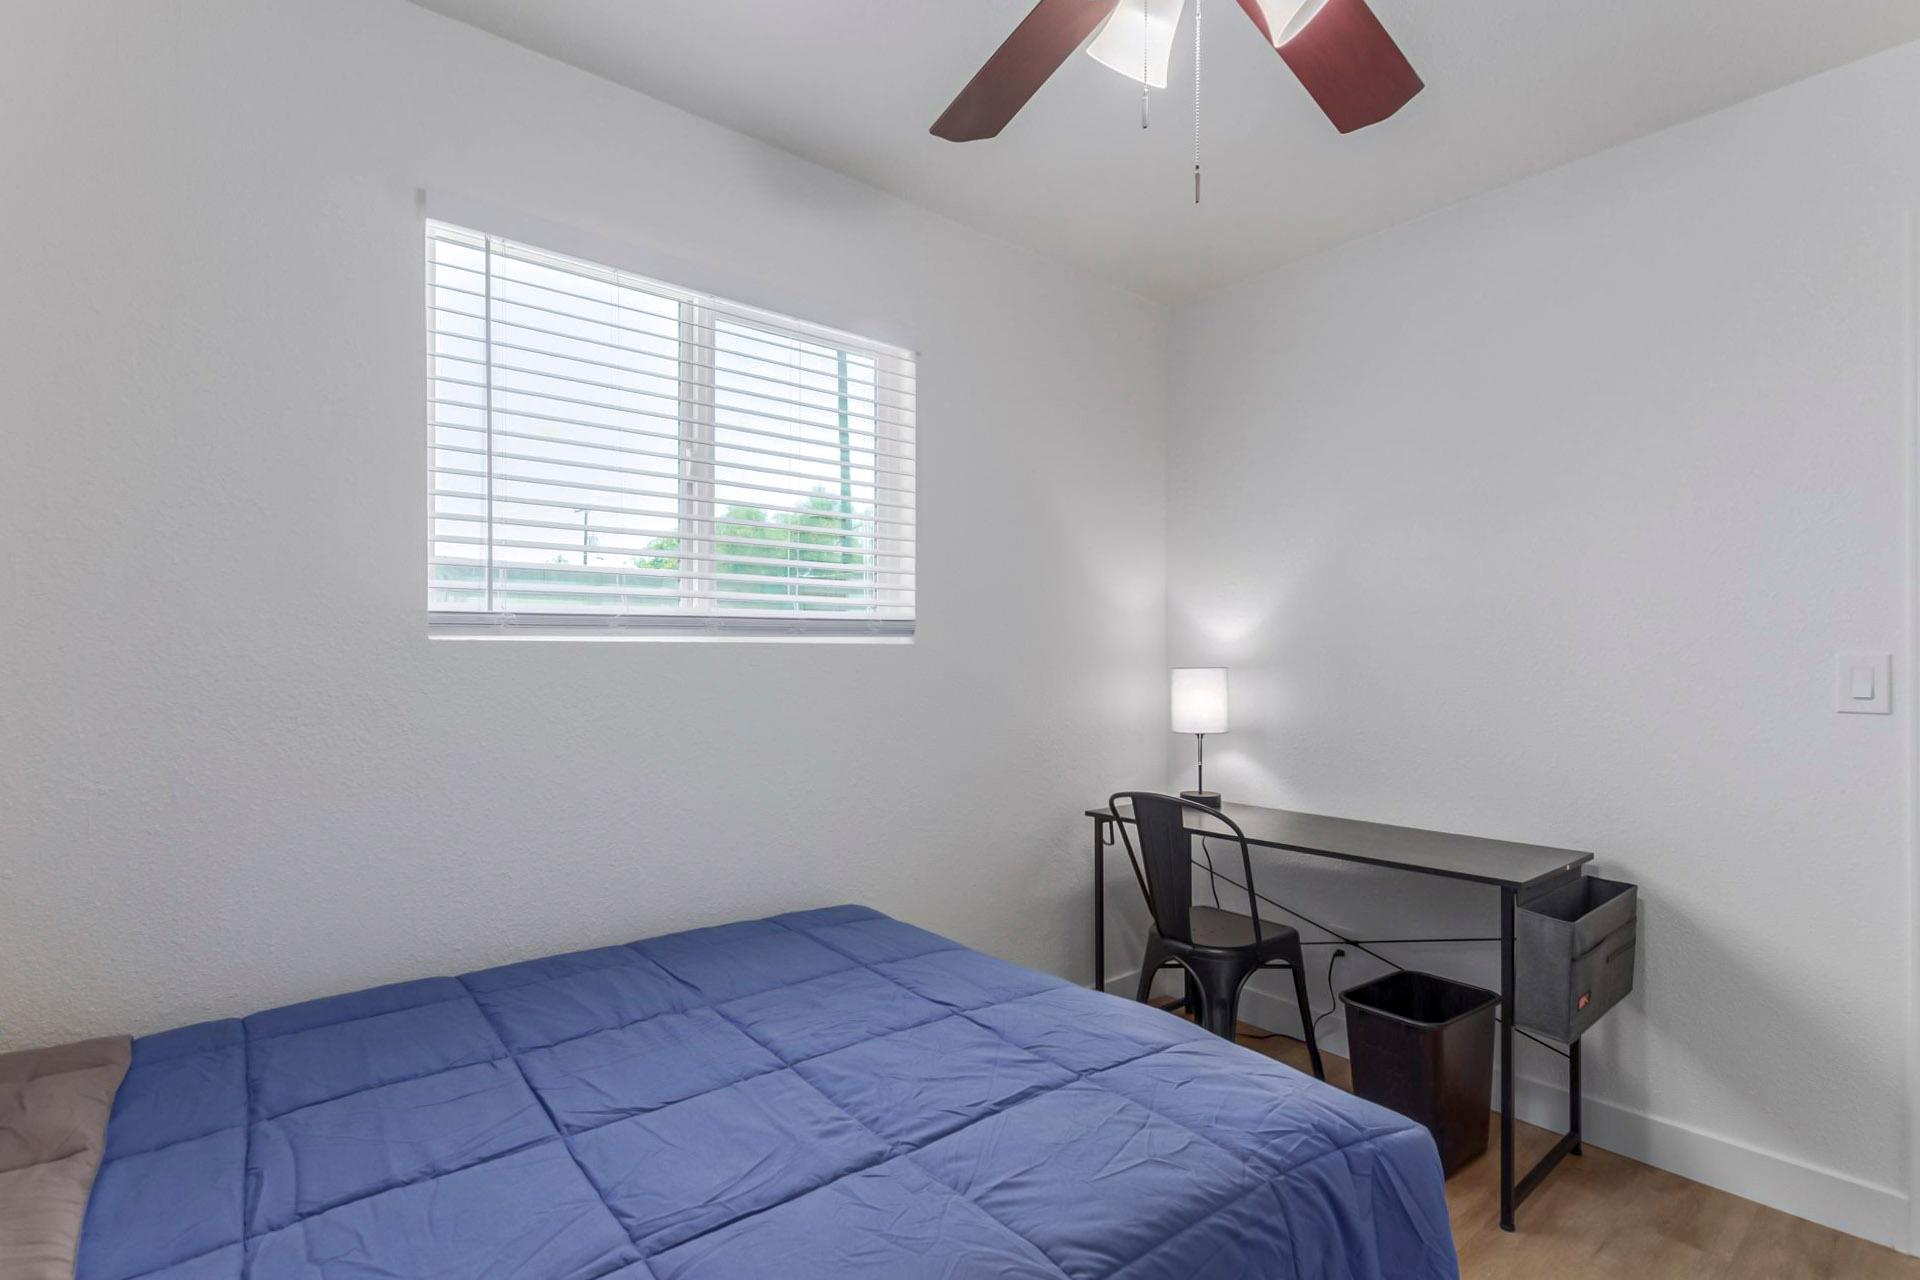 bedroom, detected:window blind, ceiling fan, bed